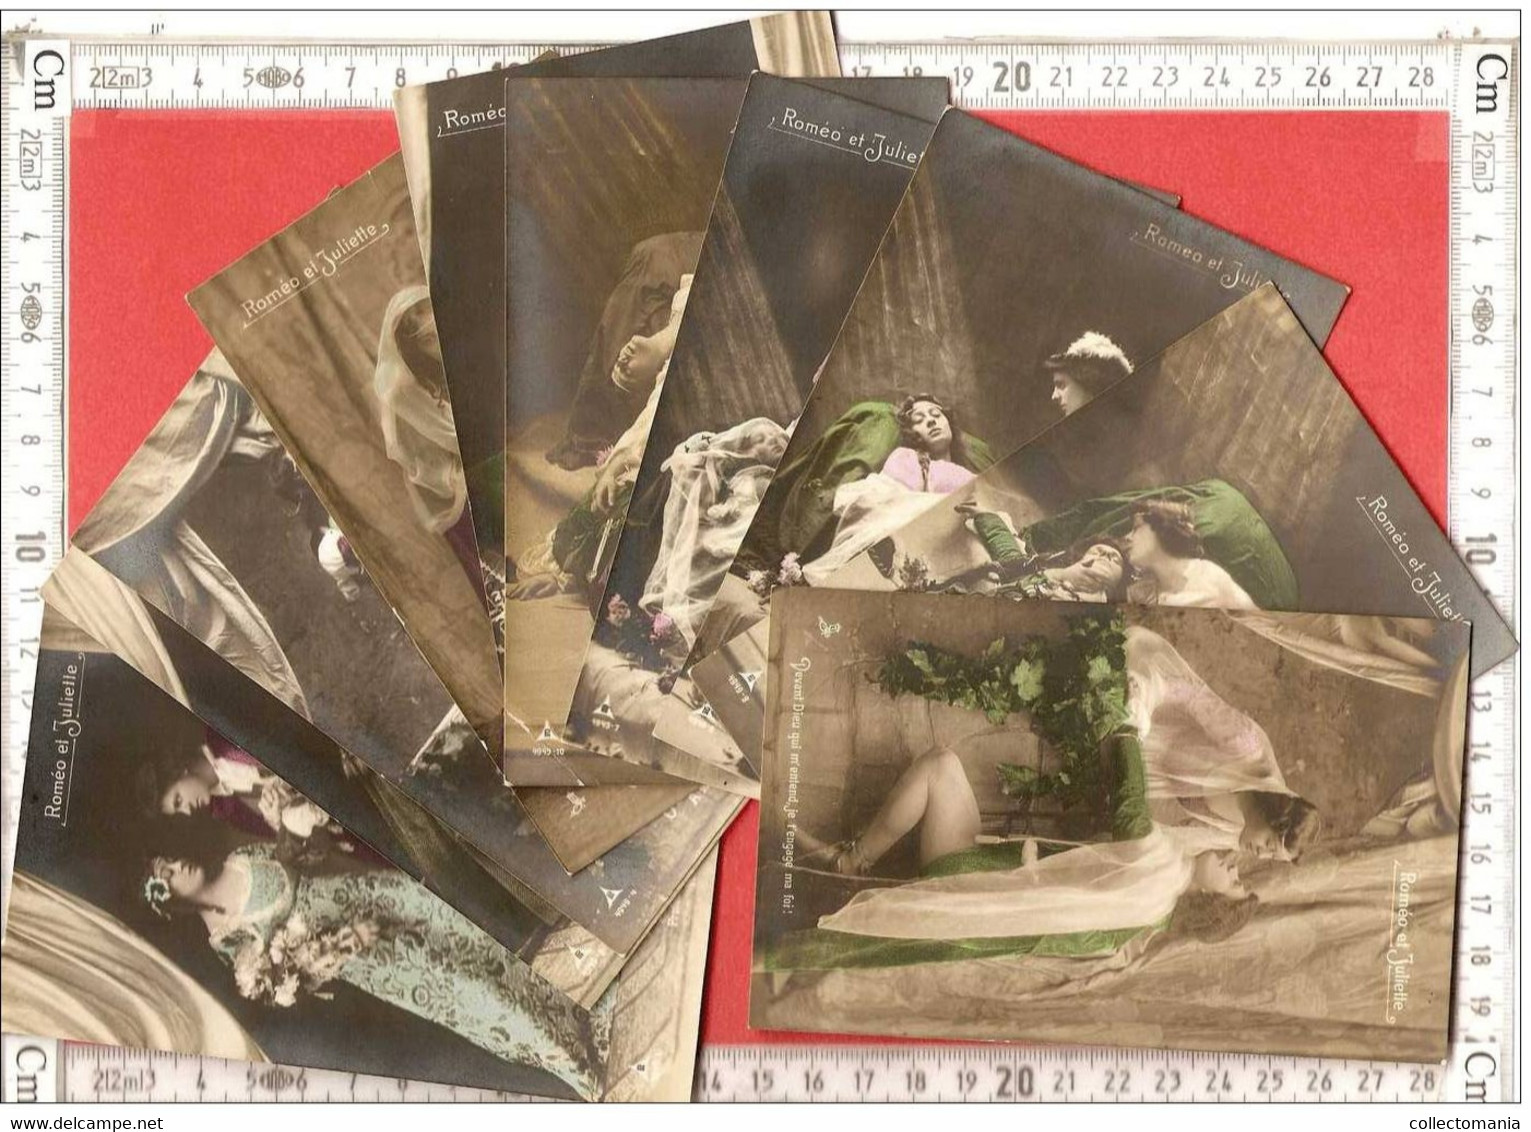 10 stuks opera Romeo Roméo Julia Juliette P H  4949 - 9 papier radium brom - hand colors tinted on glas of photgrapher